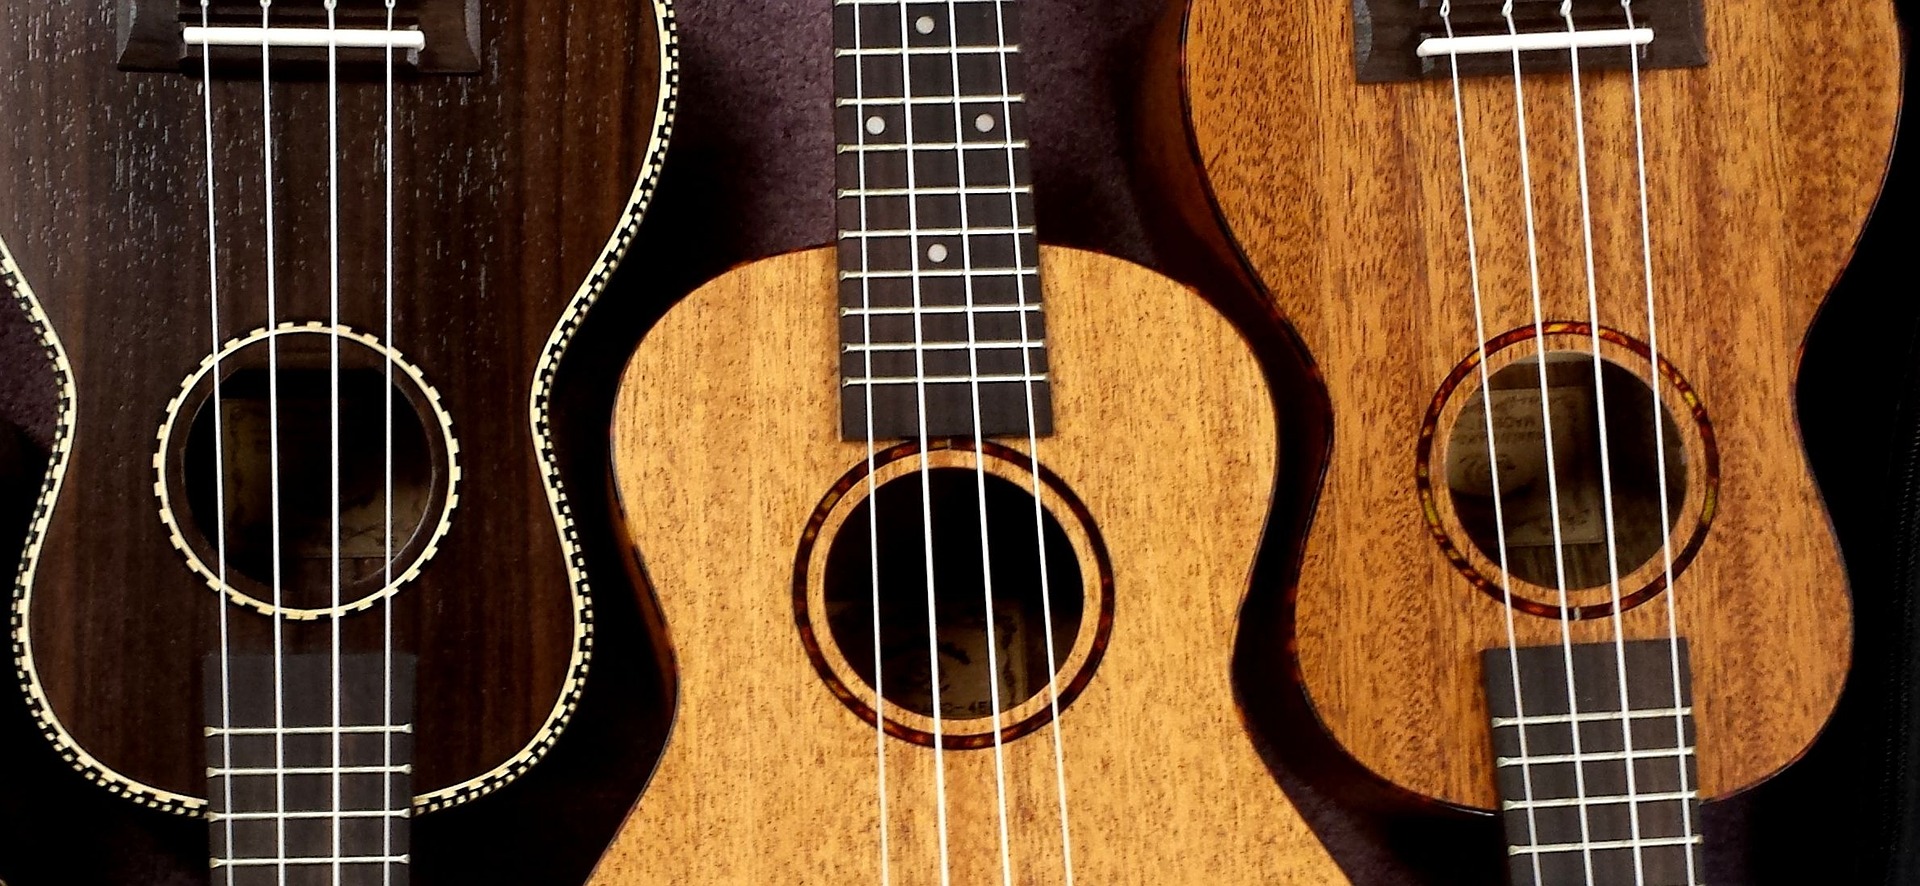 Three ukuleles